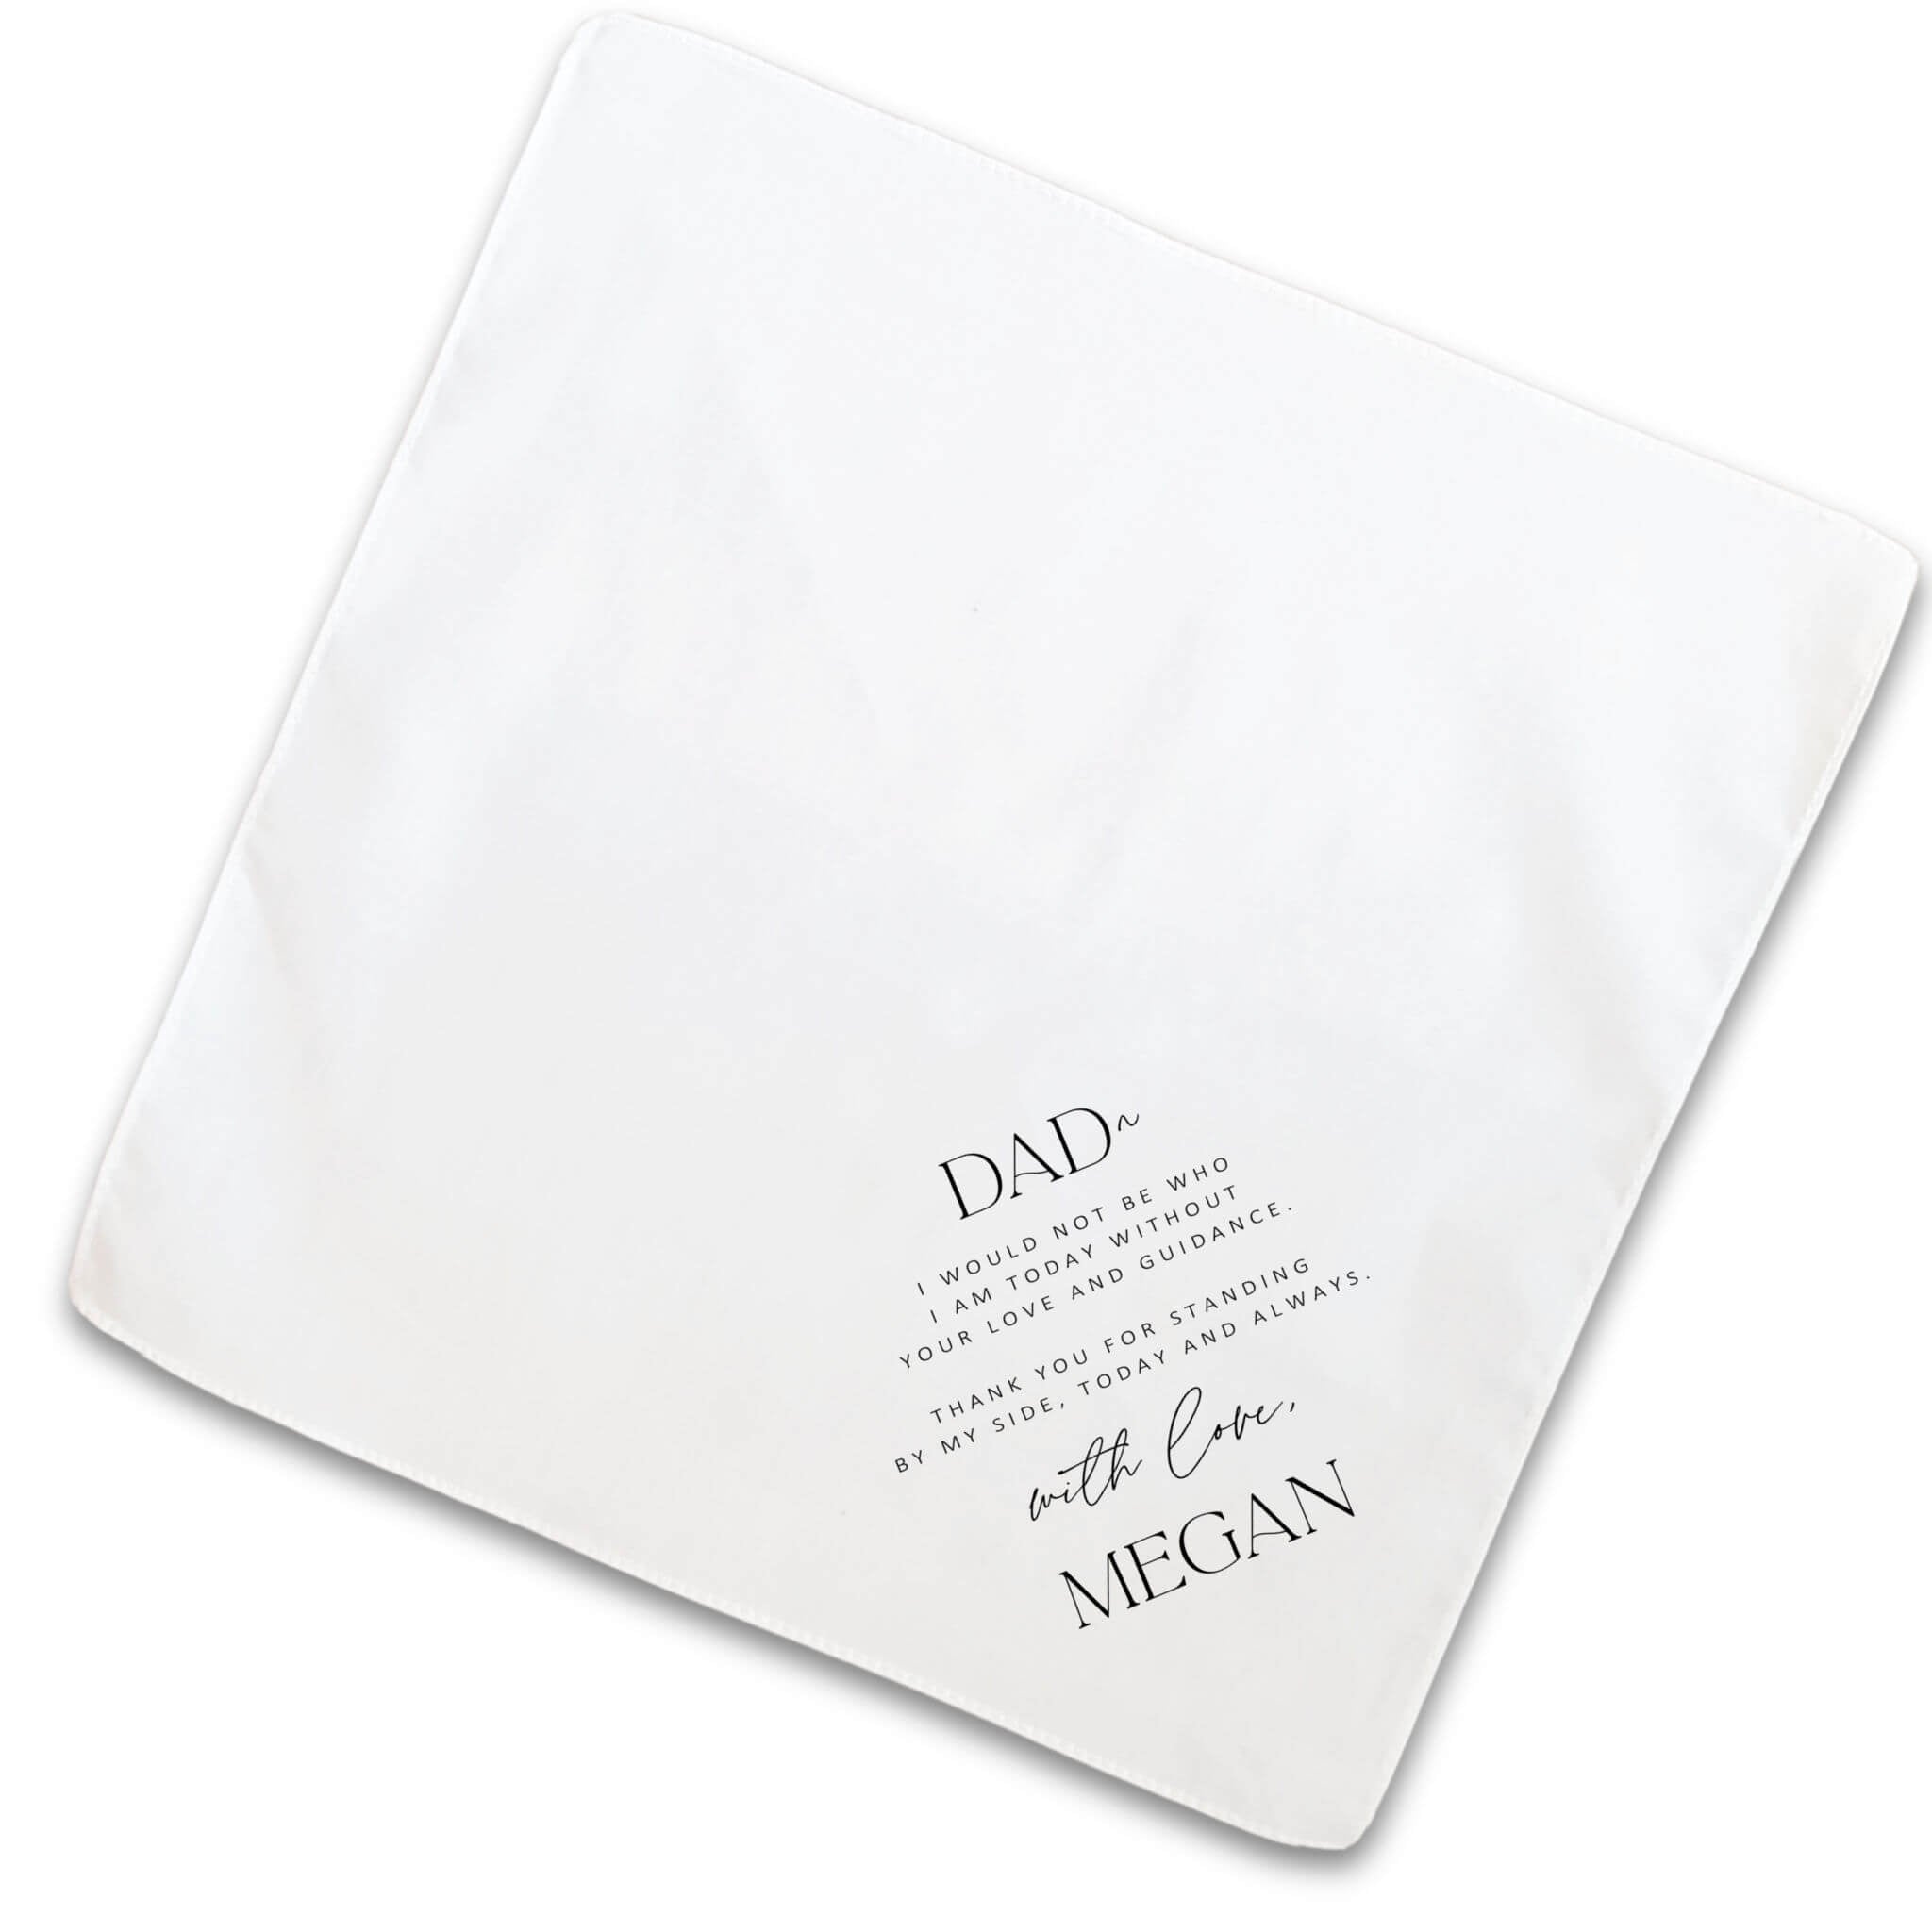 serif father handkerchief open flat on white background